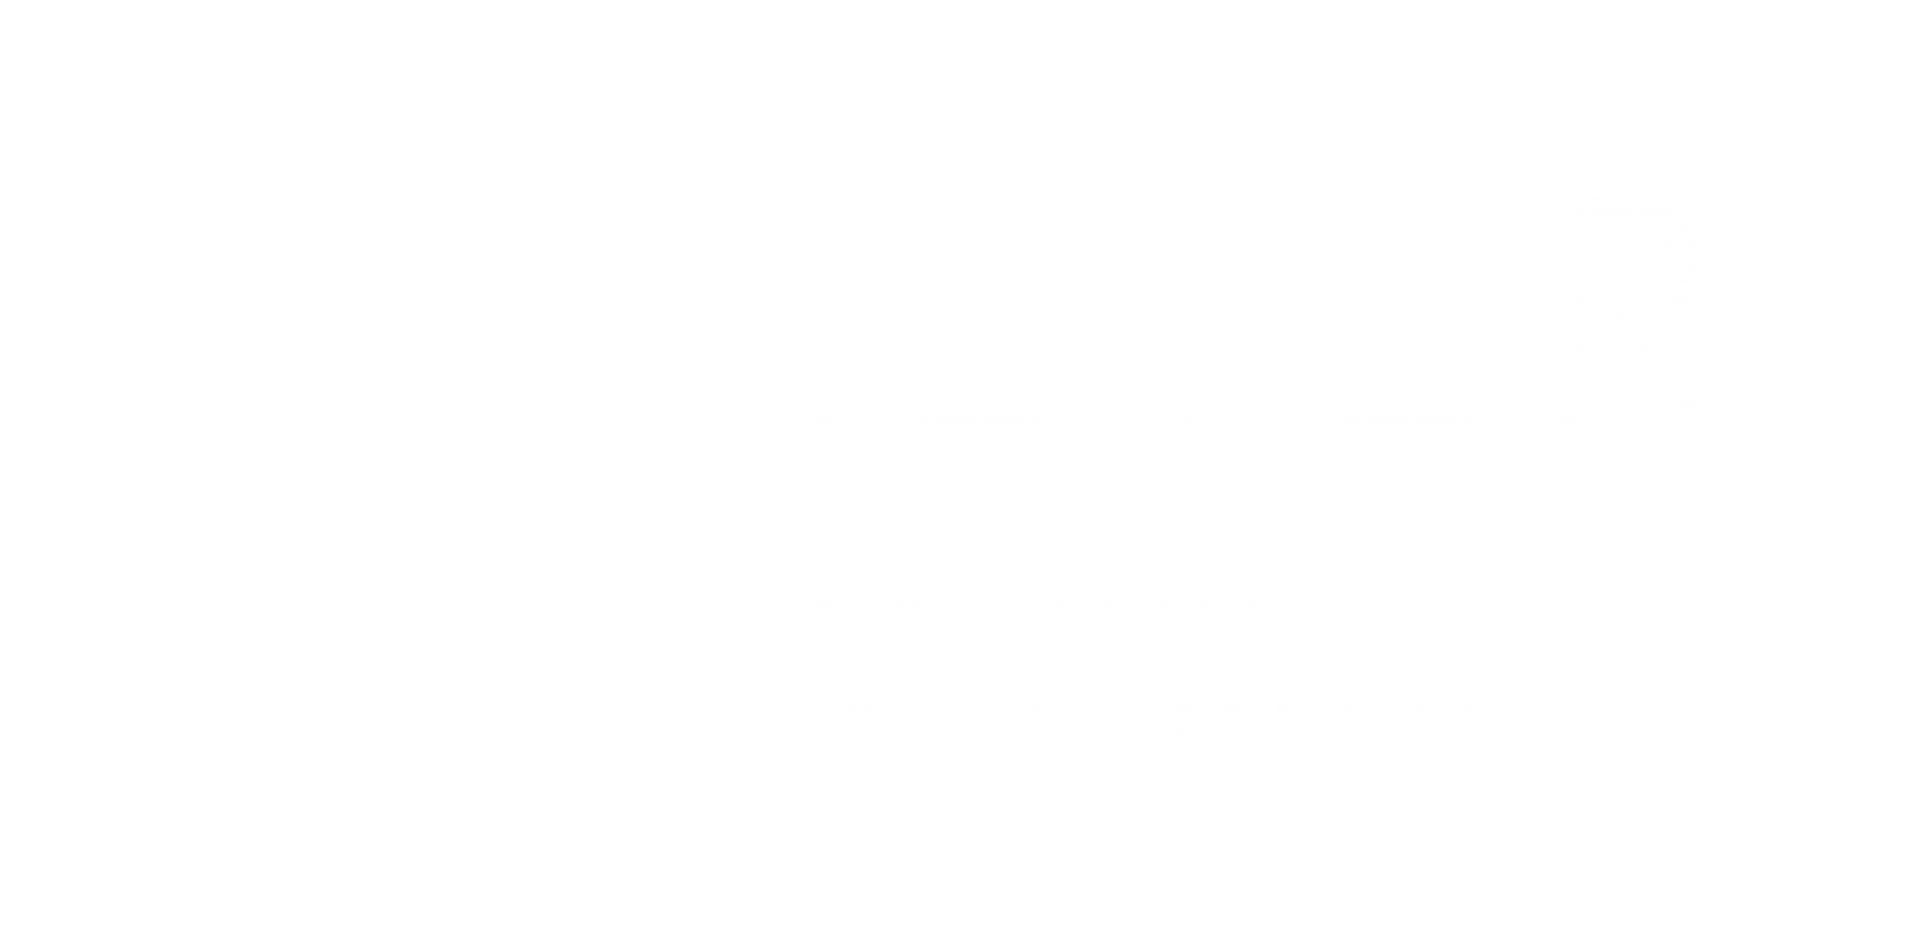 GLAESER LAW Tax Boutique